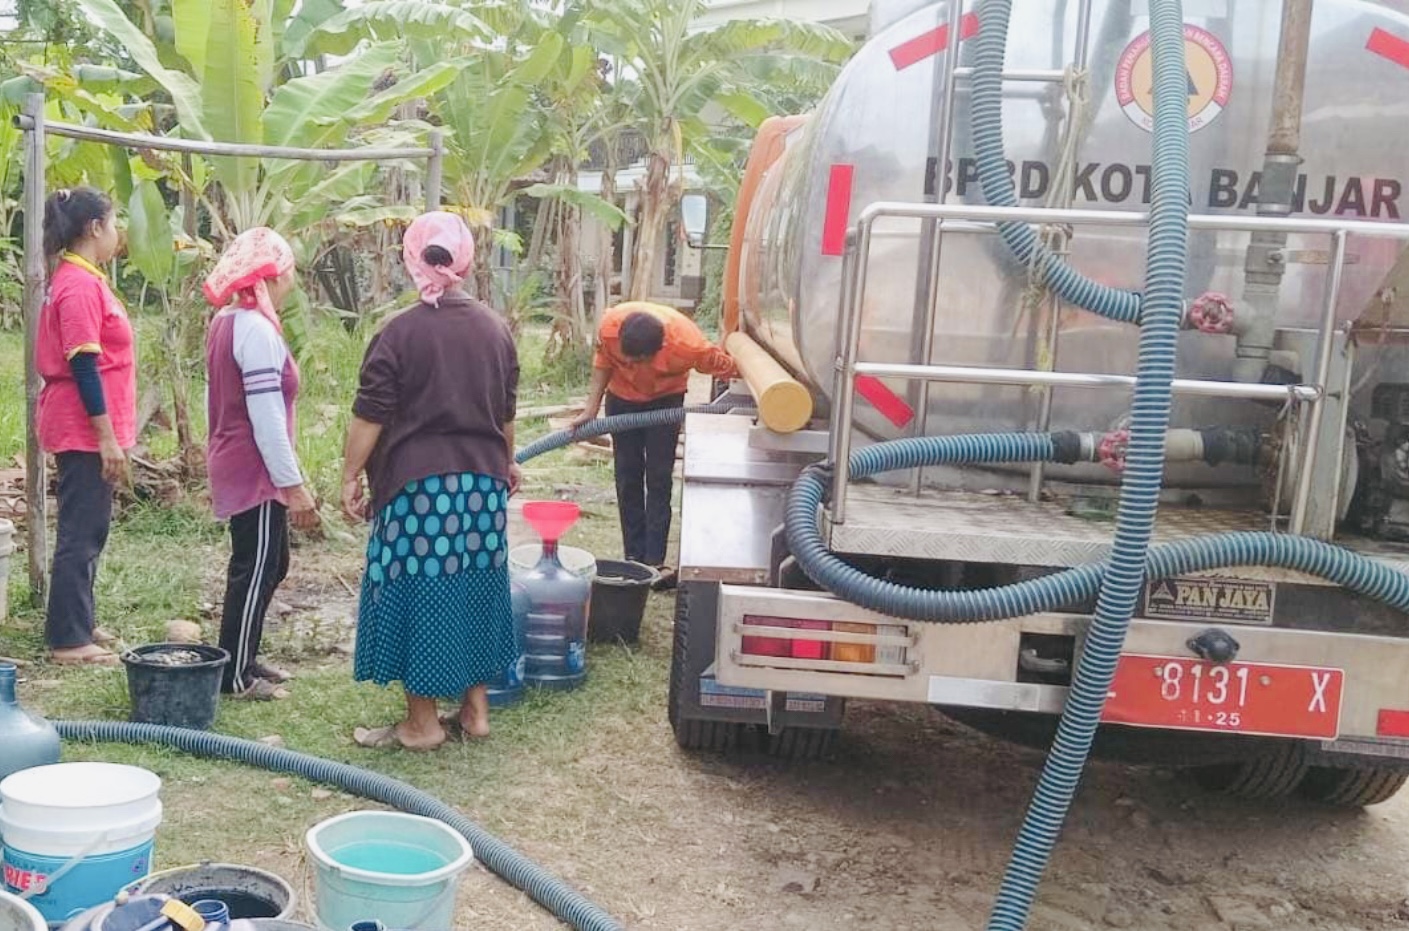 PENGUMUMAN Buat Warga Kota Banjar, Ini Cara Pengajuan Air Bersih ke BPBD